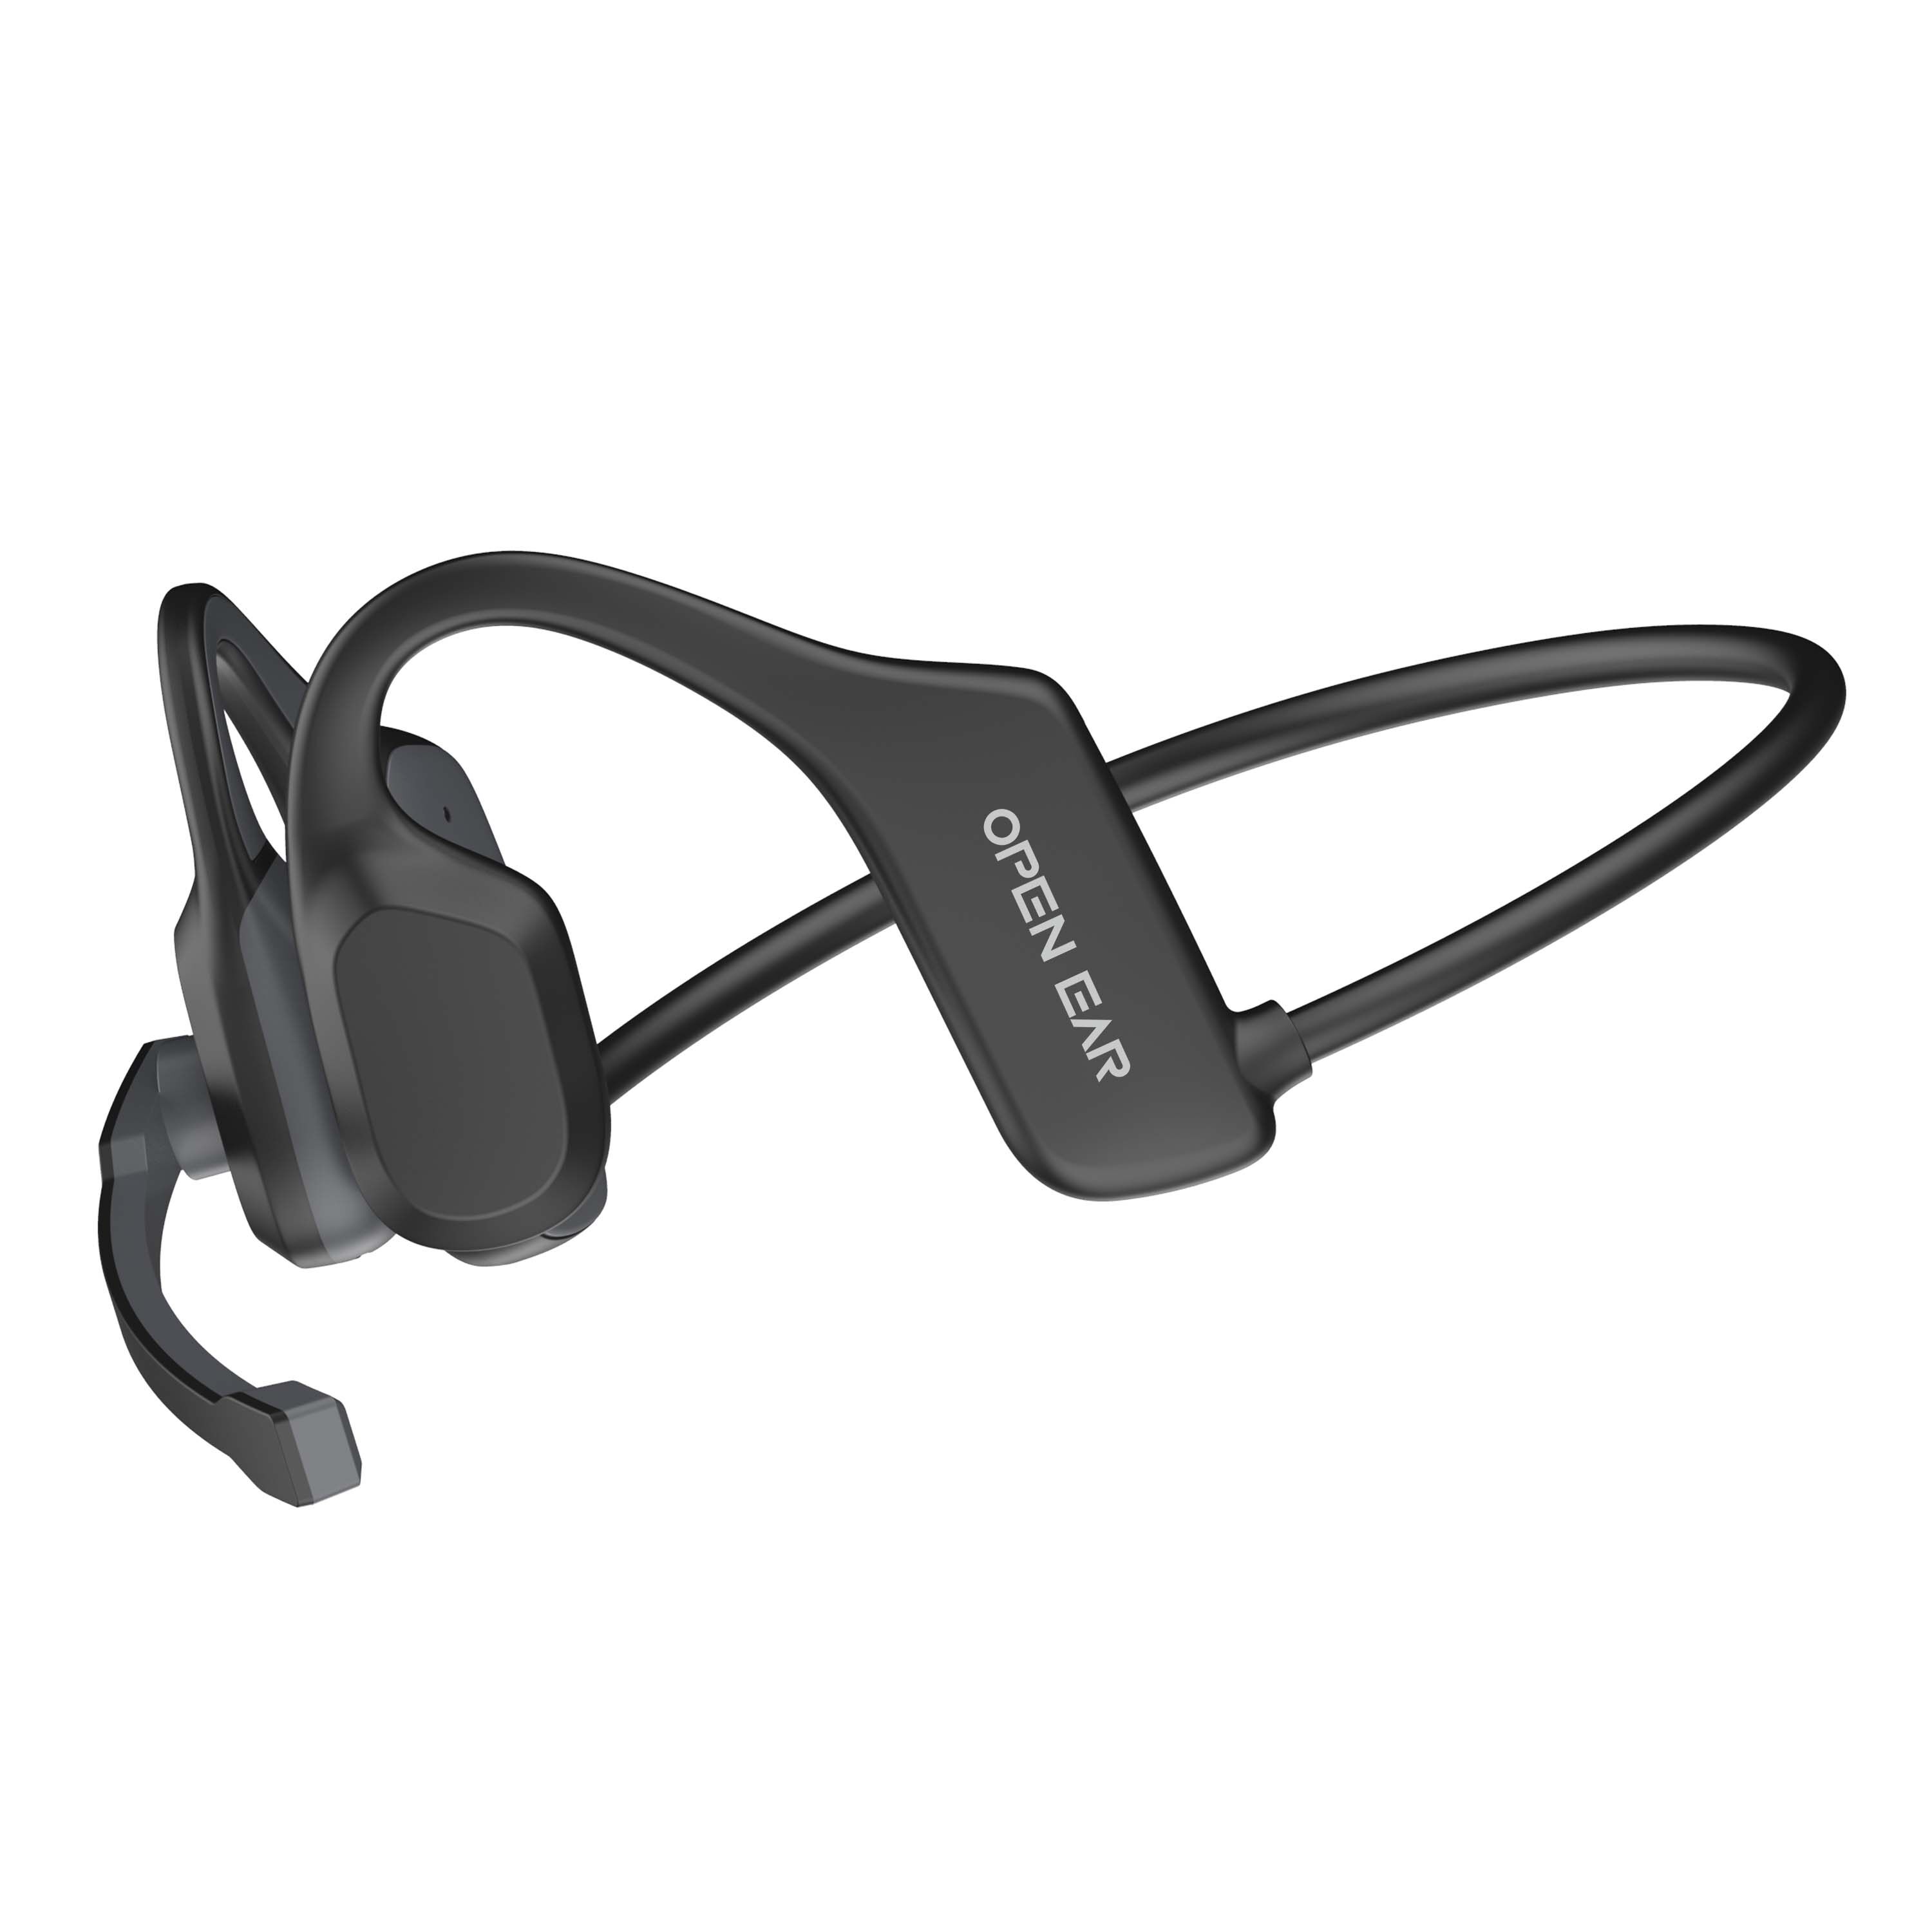 OPENEAR Air X3 / Open Ear Headphone With Microphone